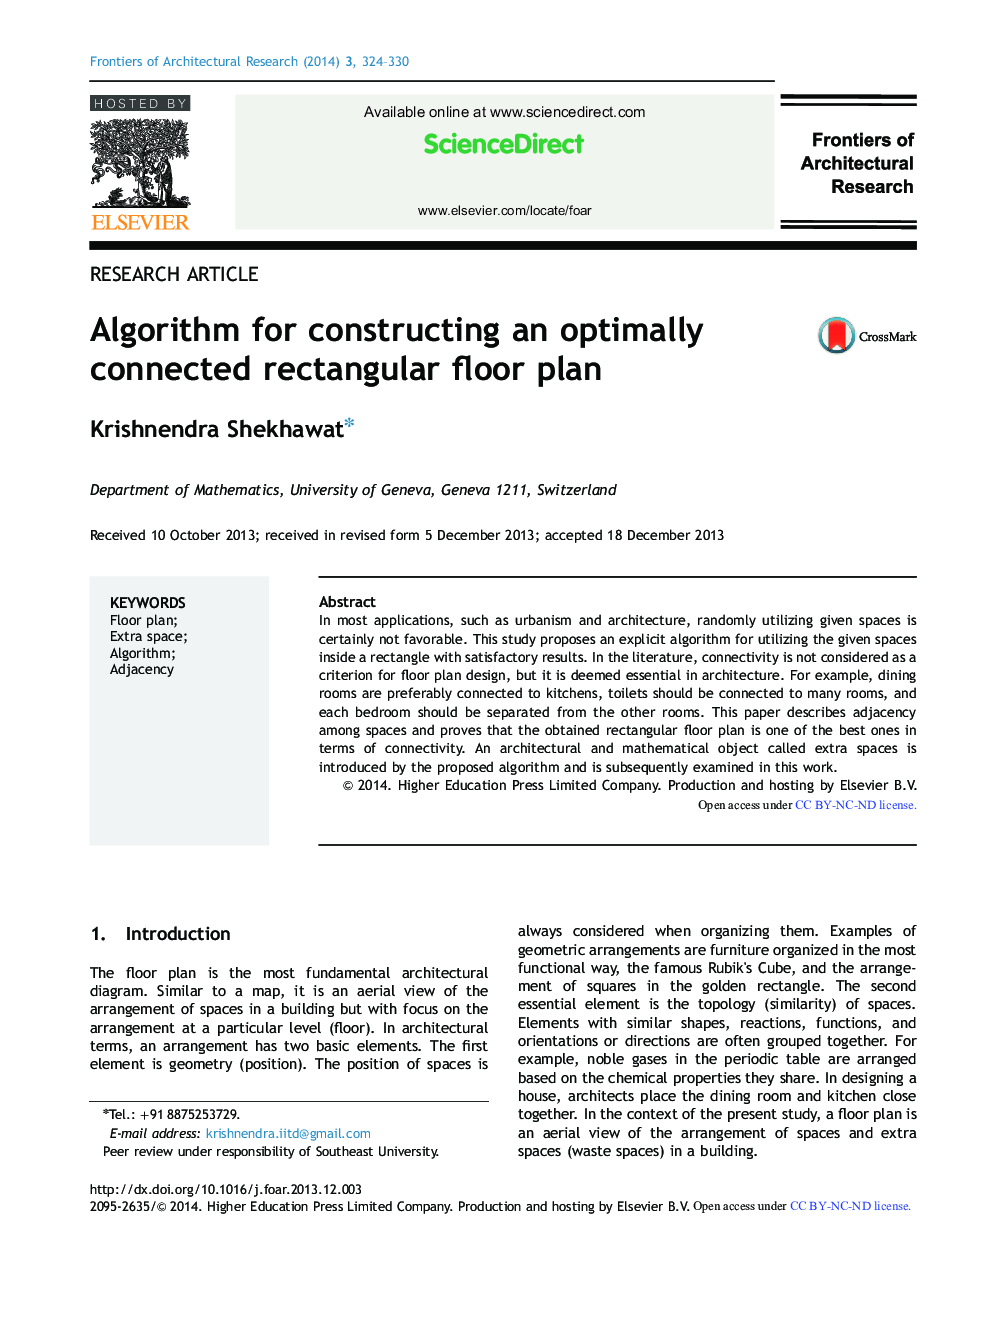 Algorithm for constructing an optimally connected rectangular floor plan 